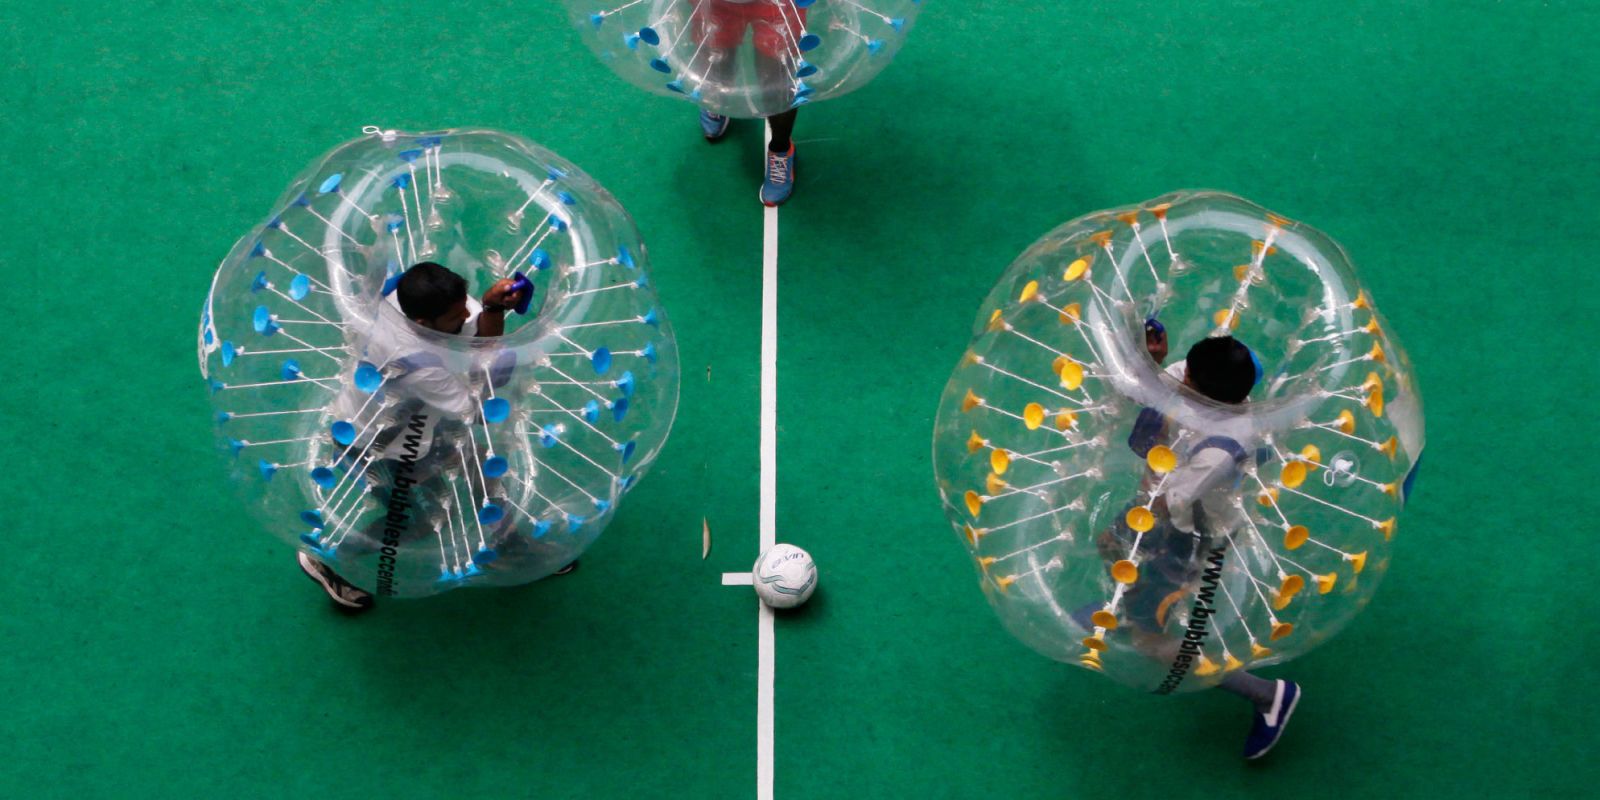 indoor bubble soccer